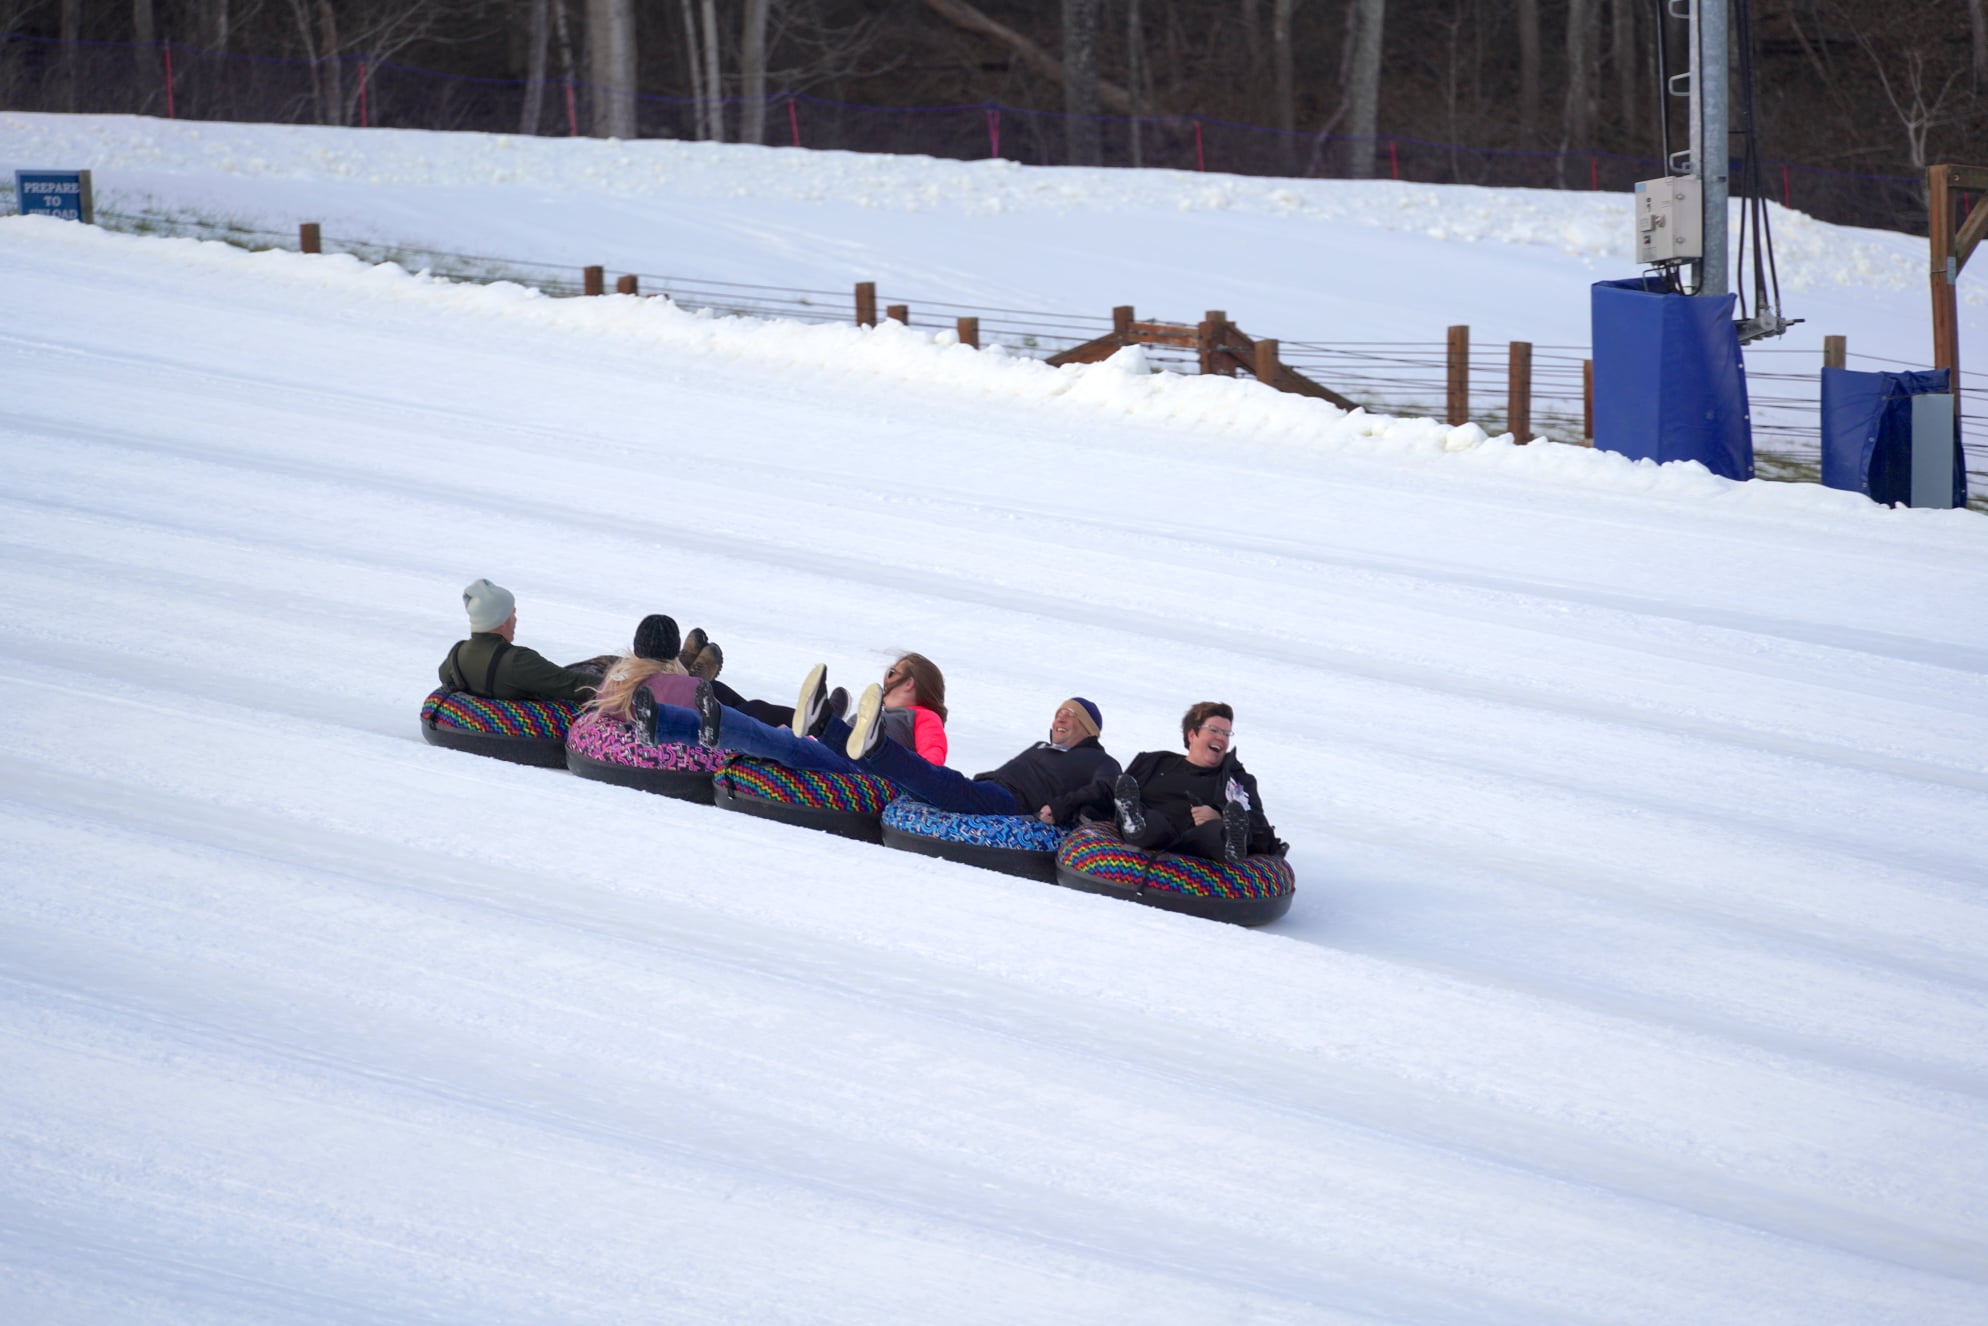 Ohio Skiing, Snowboarding, and Snow Tubing